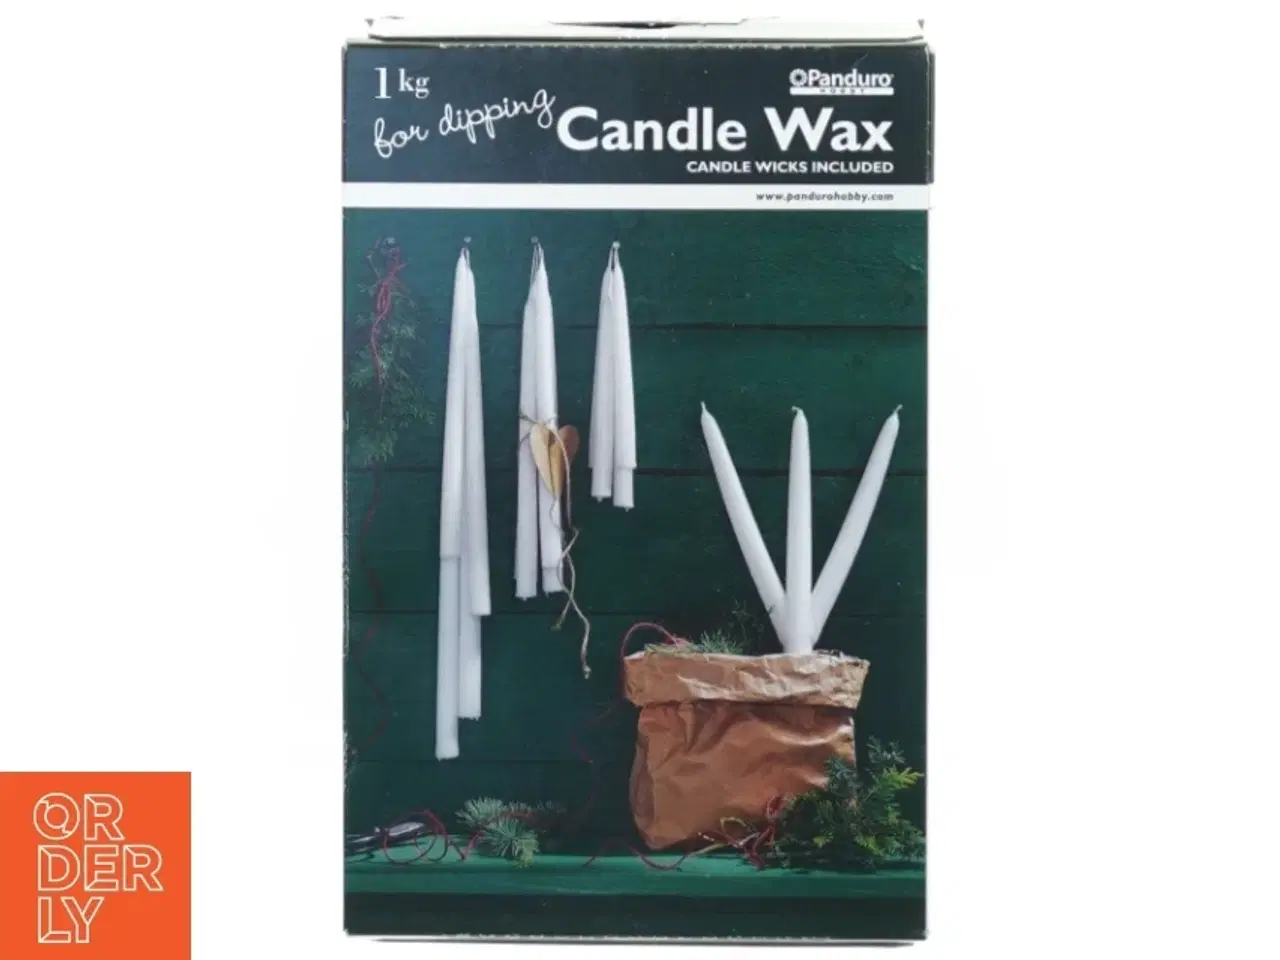 Billede 2 - Candle wax fra Panduro Hobby (str. Et kilo)